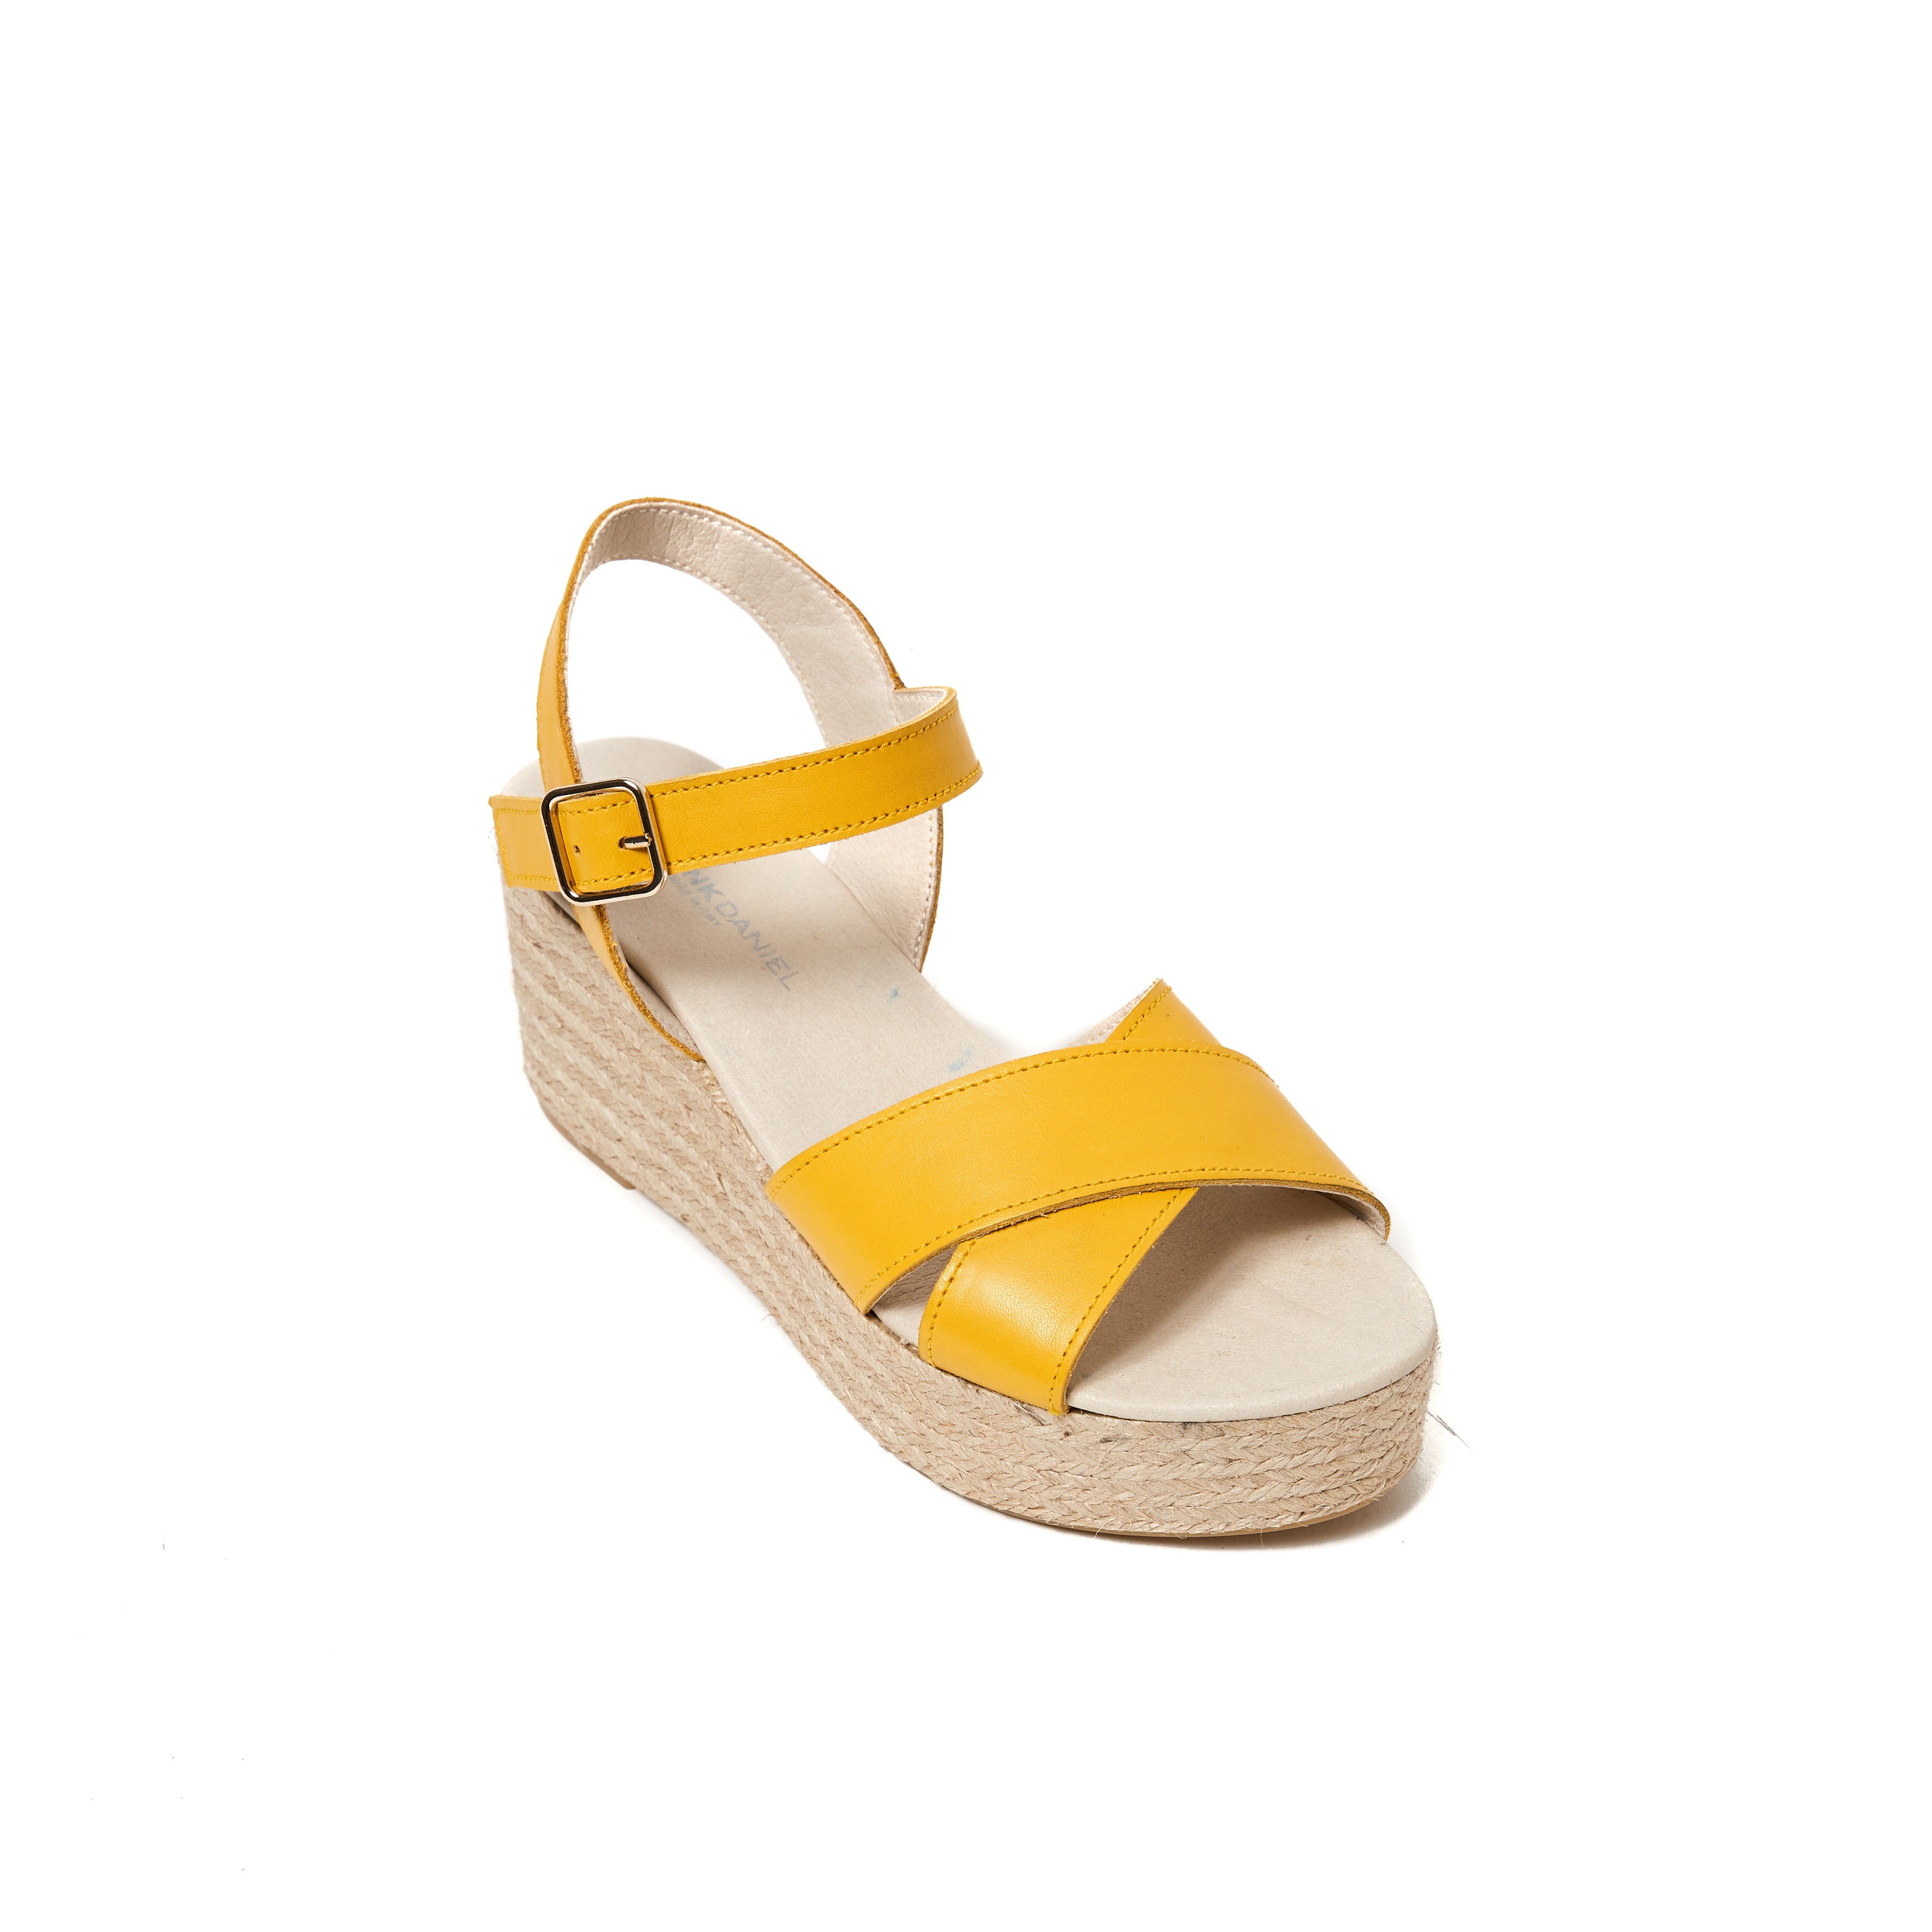 Sandal sun yellow